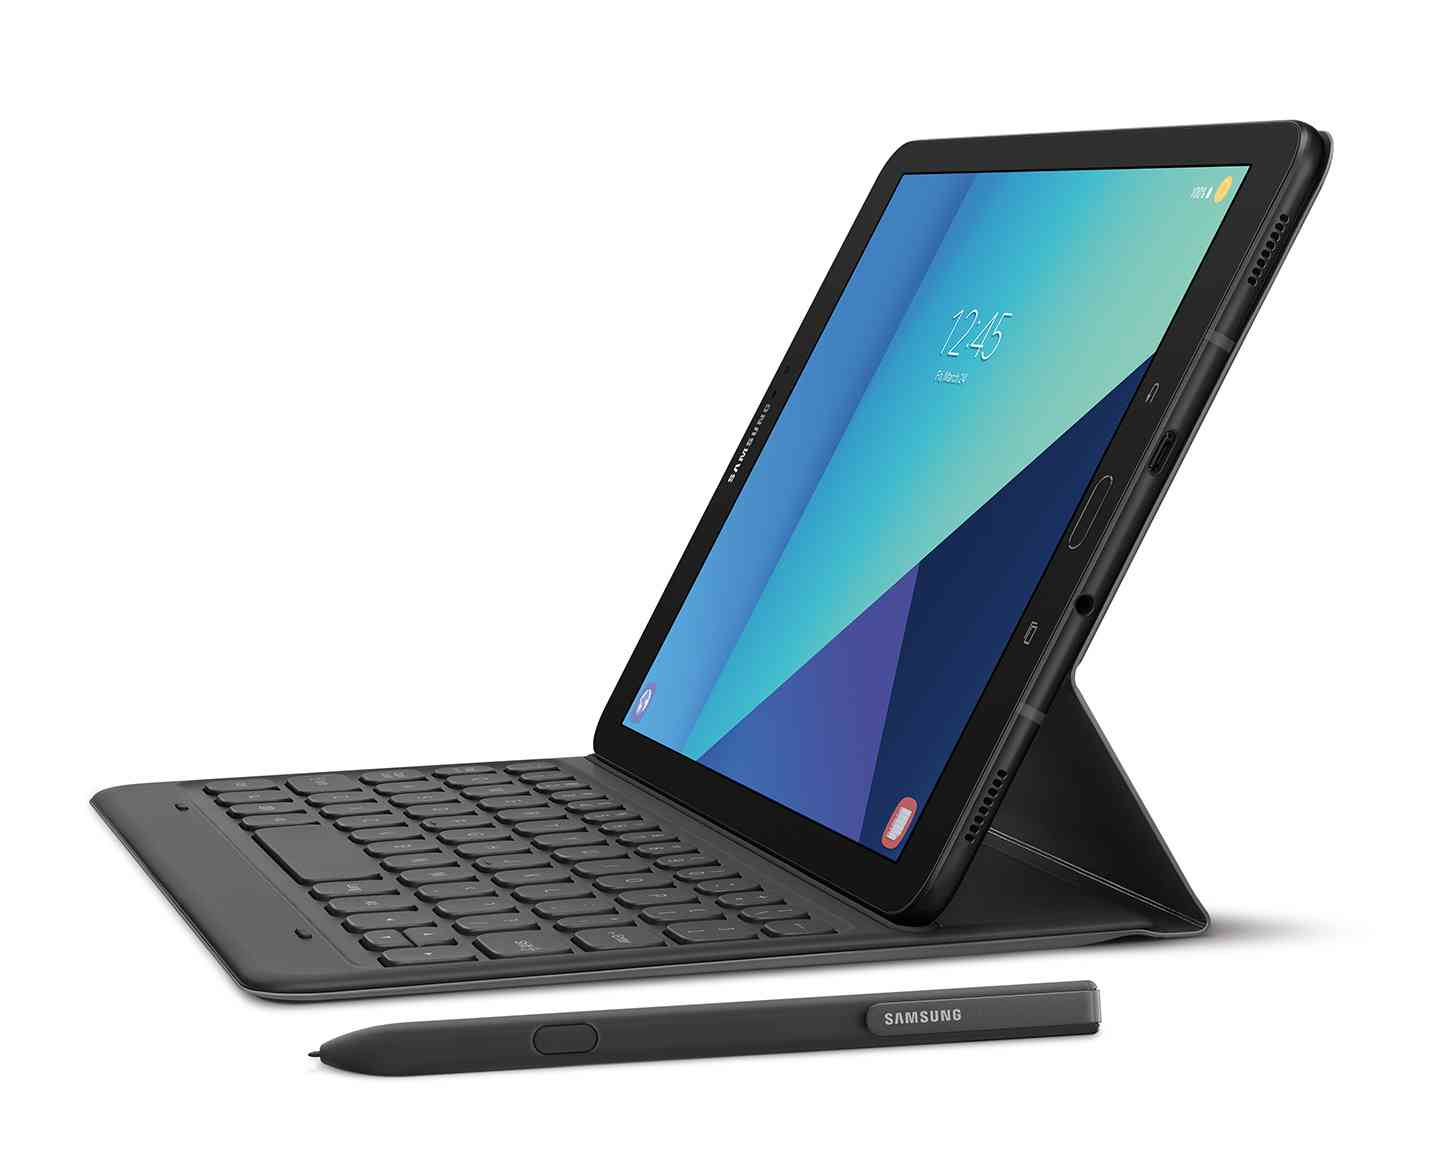 Samsung Galaxy Tab S3 keyboard cover